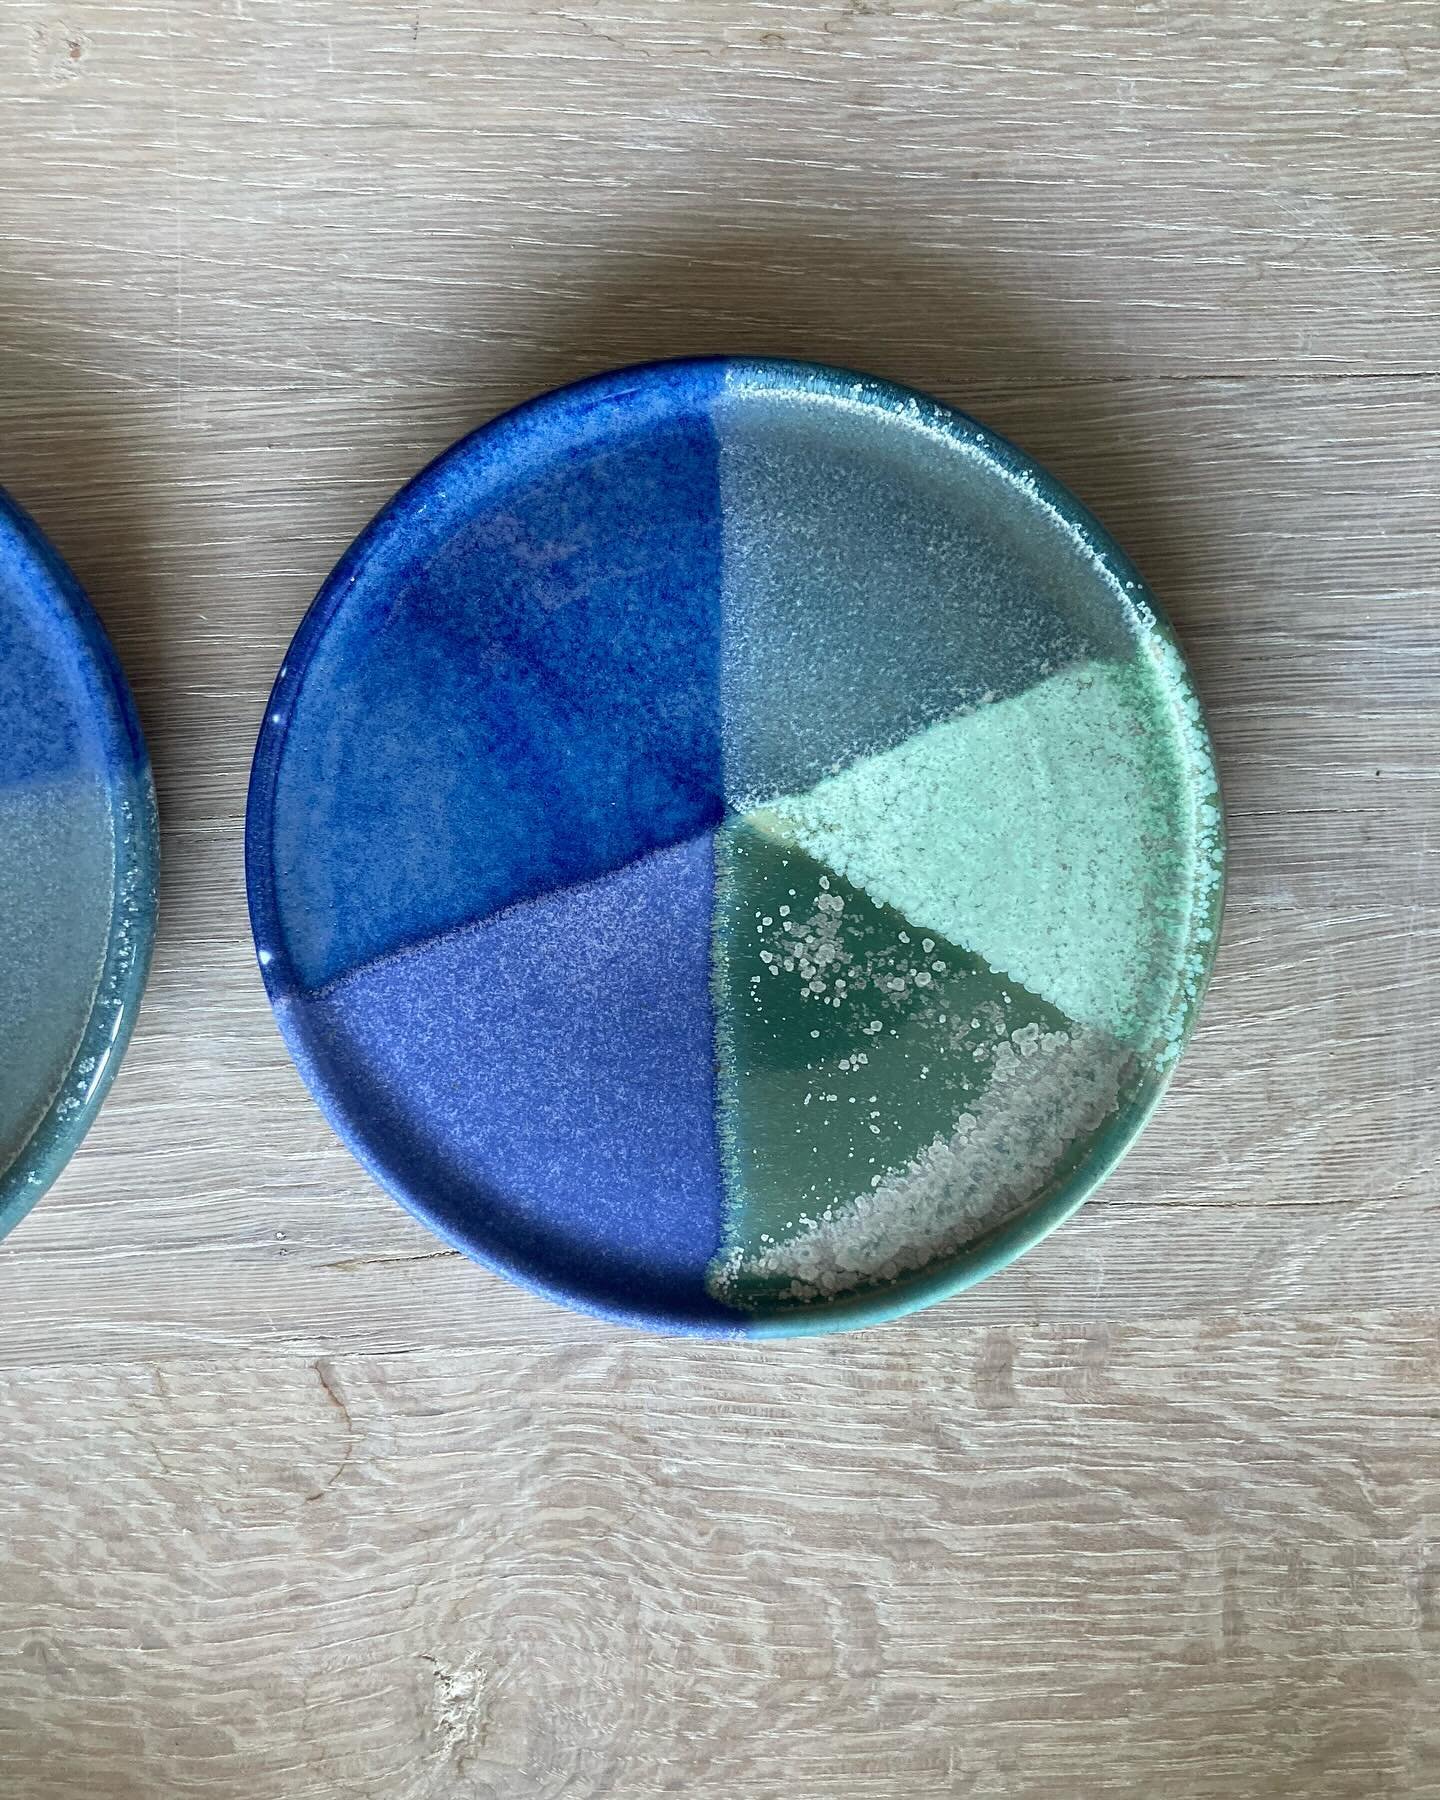 Happy Saturday - new glaze test on porcelain clay👍😊. 
.
.
.
.
.
. ❤️🌿#pollipots #vase @pollipots  #flowervase #giftshop #handmade #potteryshop #navy #navypolkadots #blue #brickmortar #hygge #scandinavian #beachpottery #stoneware #handmadeceramics 